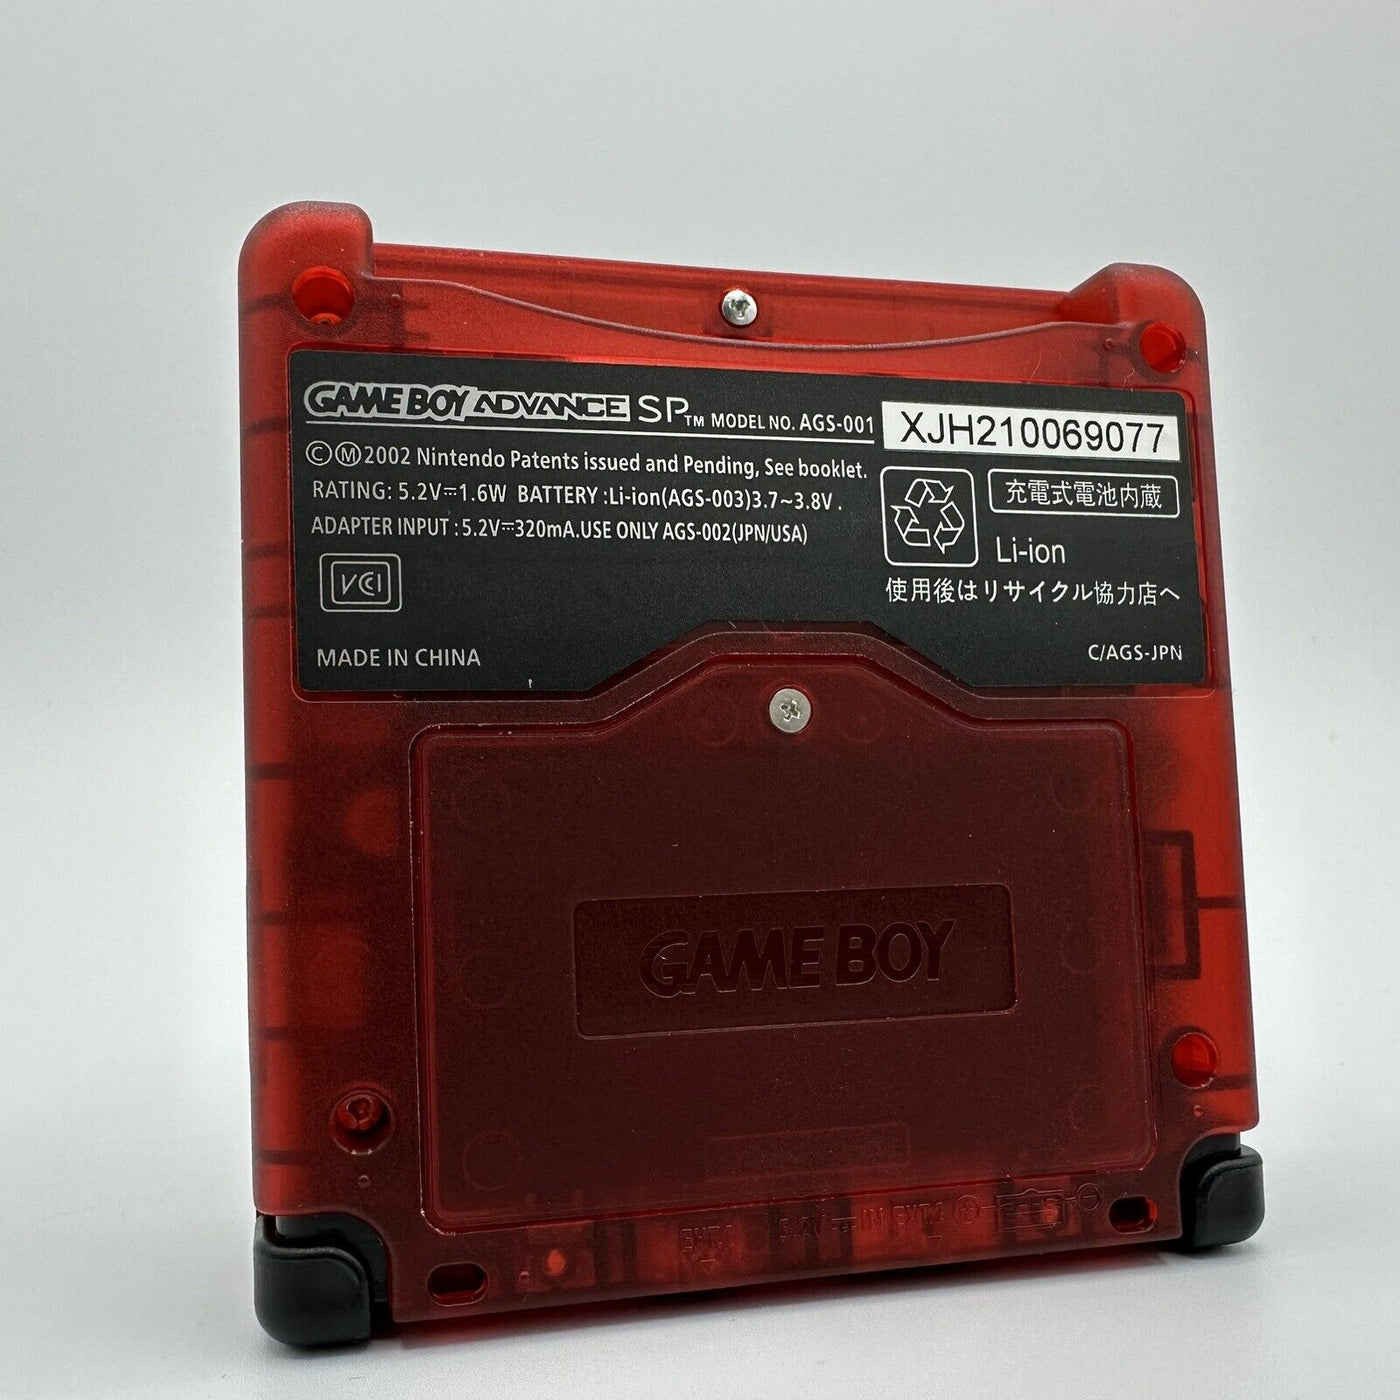 Game Boy Advance SP Console - Transparent Red